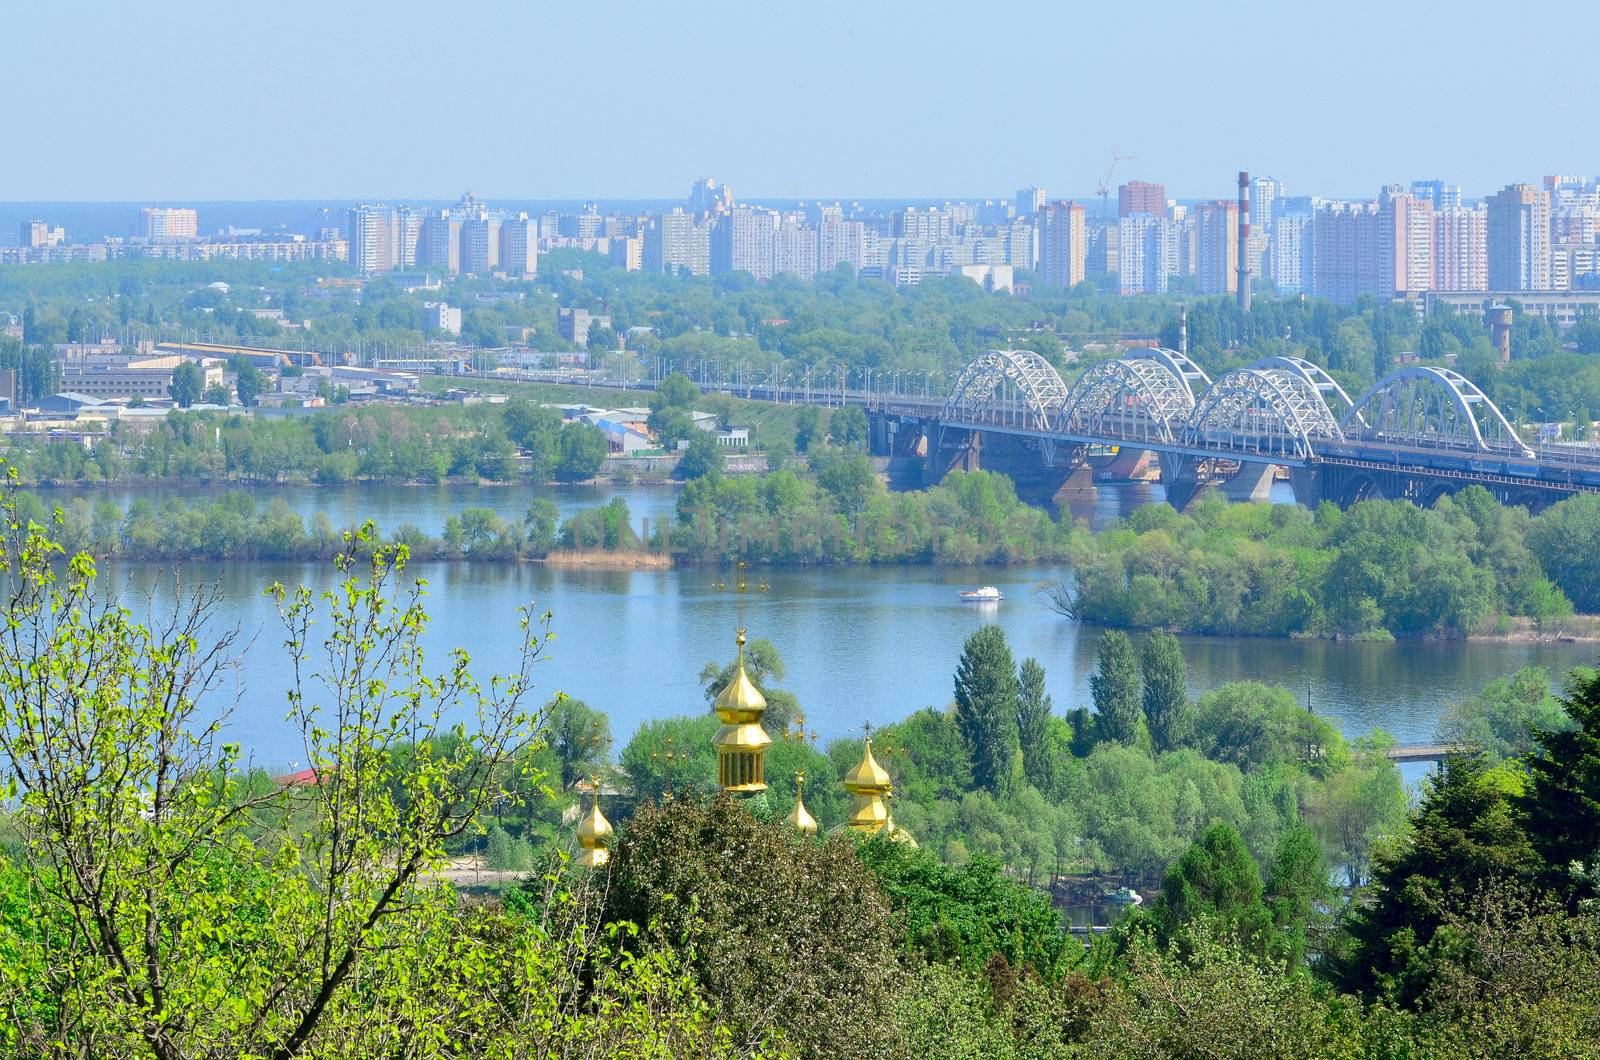 Kyiv Botanical Garden in spring. Kyiv, Ukraine by DNKSTUDIO